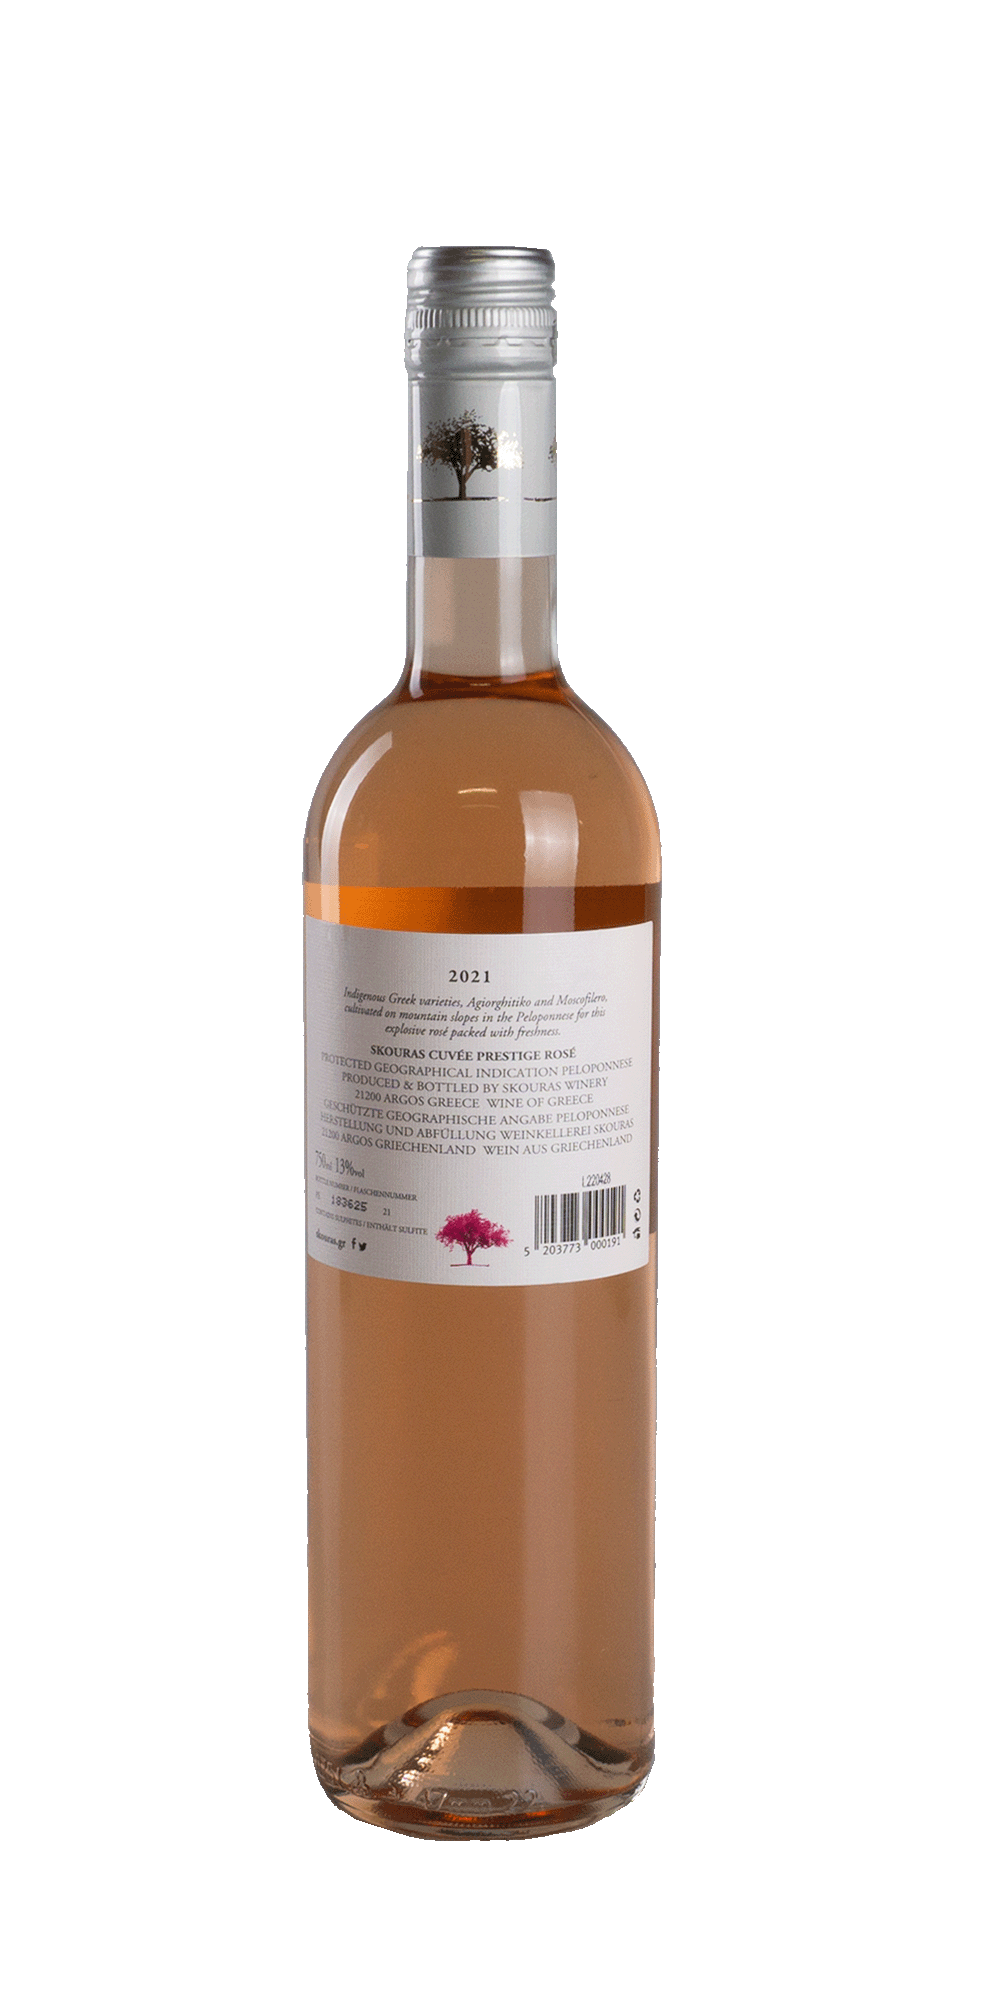 Cuvée Prestige Rosé 2022 - Domaine Skouras 